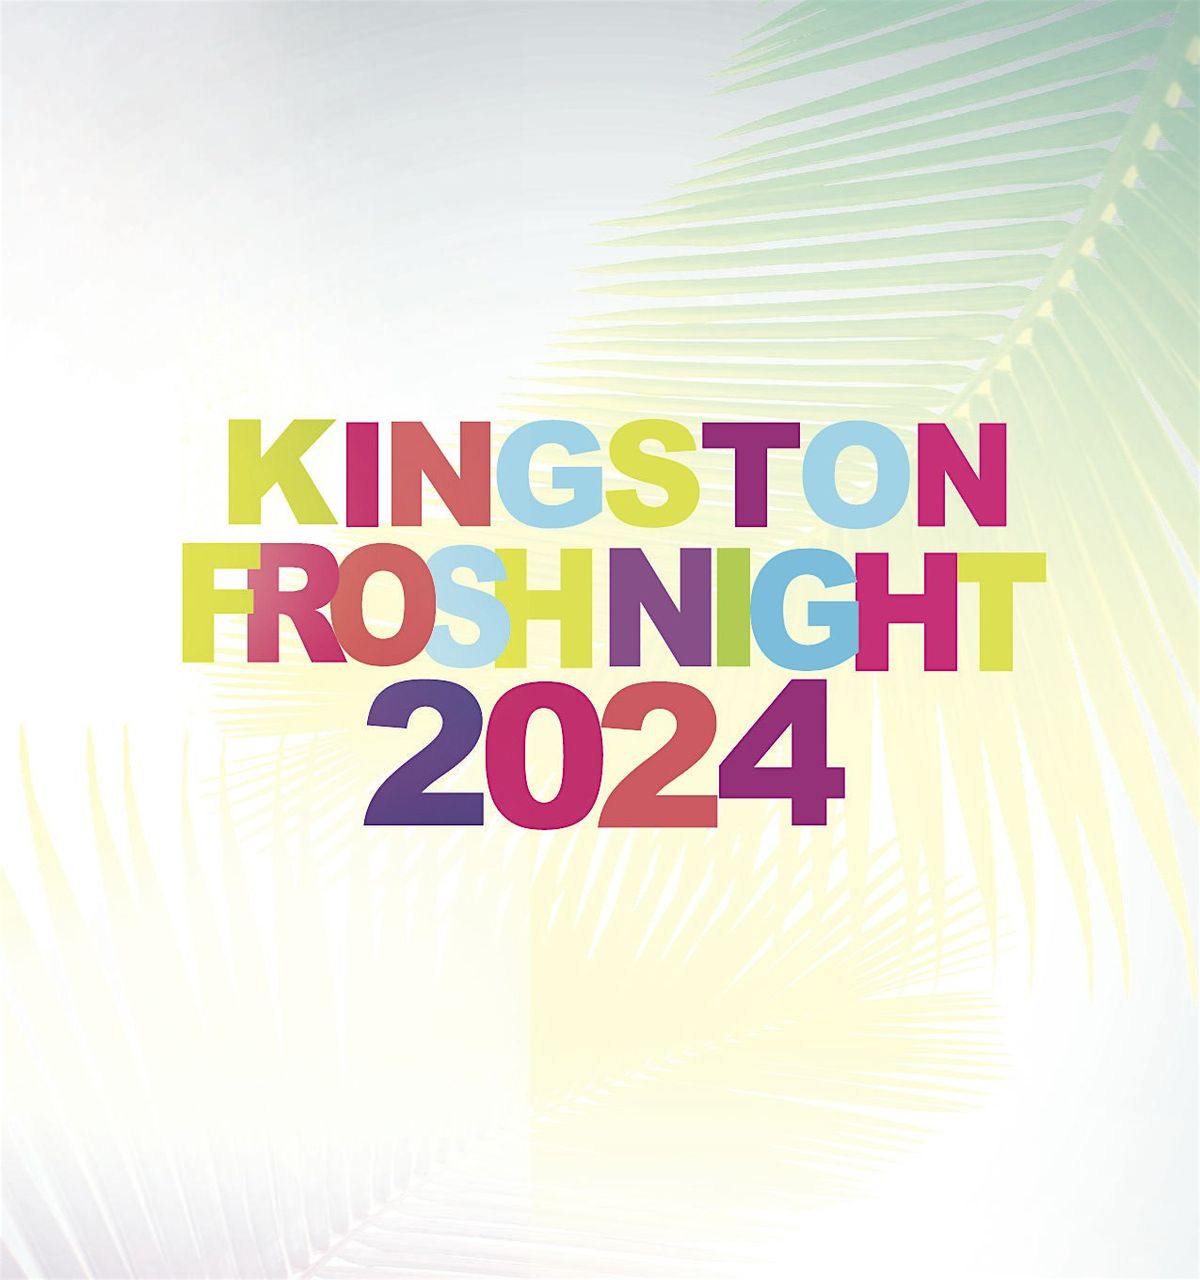 KINGSTON FROSH NIGHT 2024 | OFFICIAL MEGA PARTY!